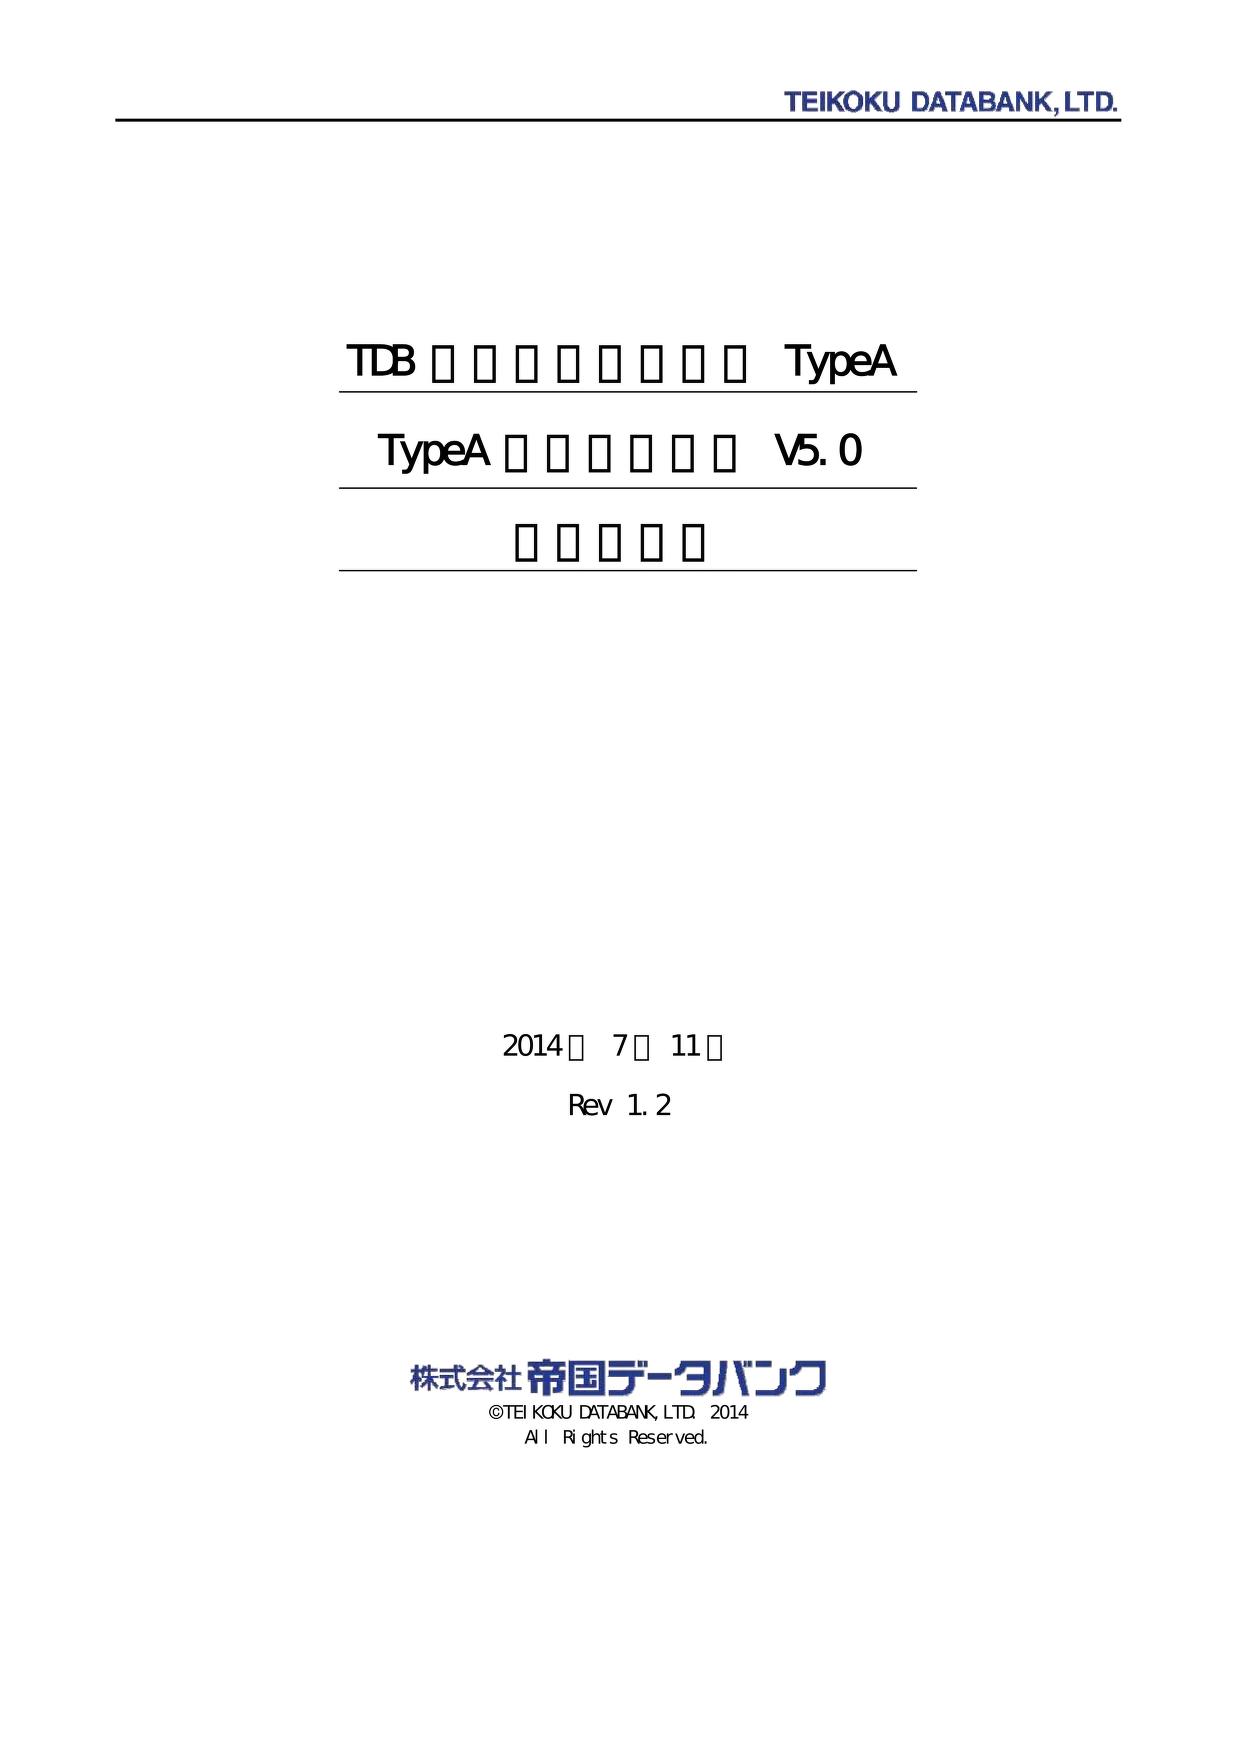 TDB 電子認証サービス TypeA TypeA ご利用ソフト V5.0 取扱説明書